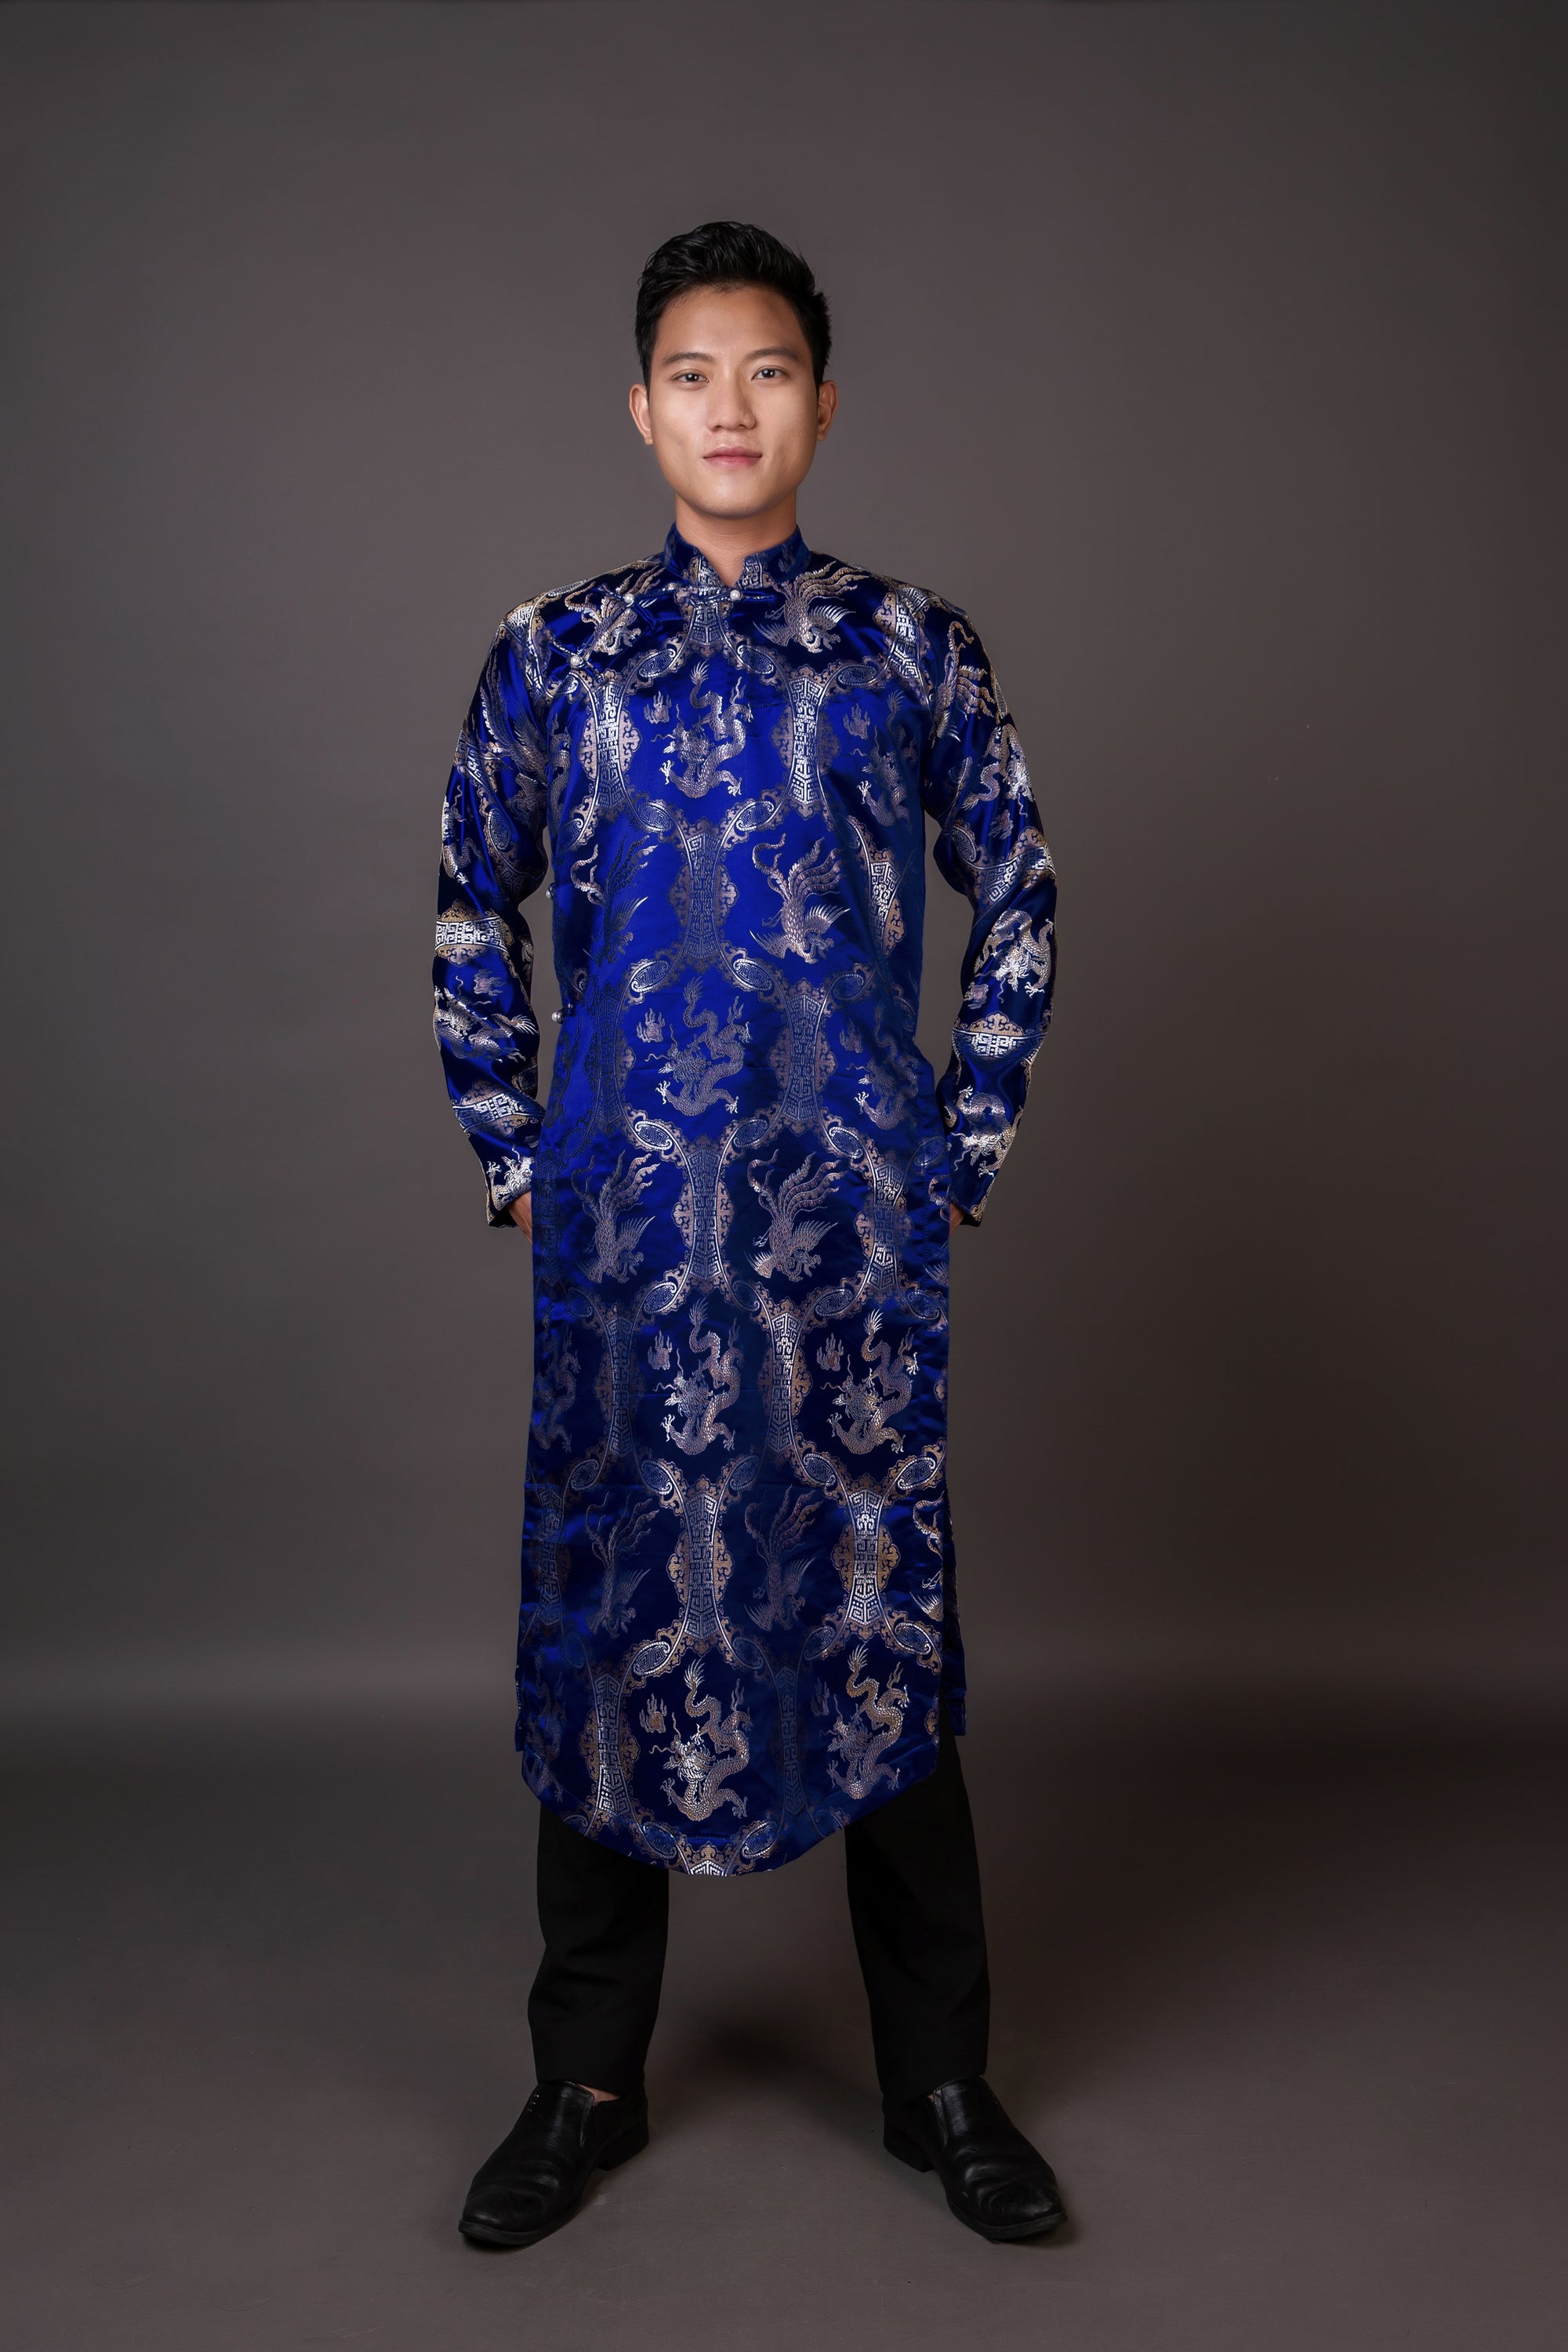 Men's ao dai - Vietnamese national clothing. Free custom fit.